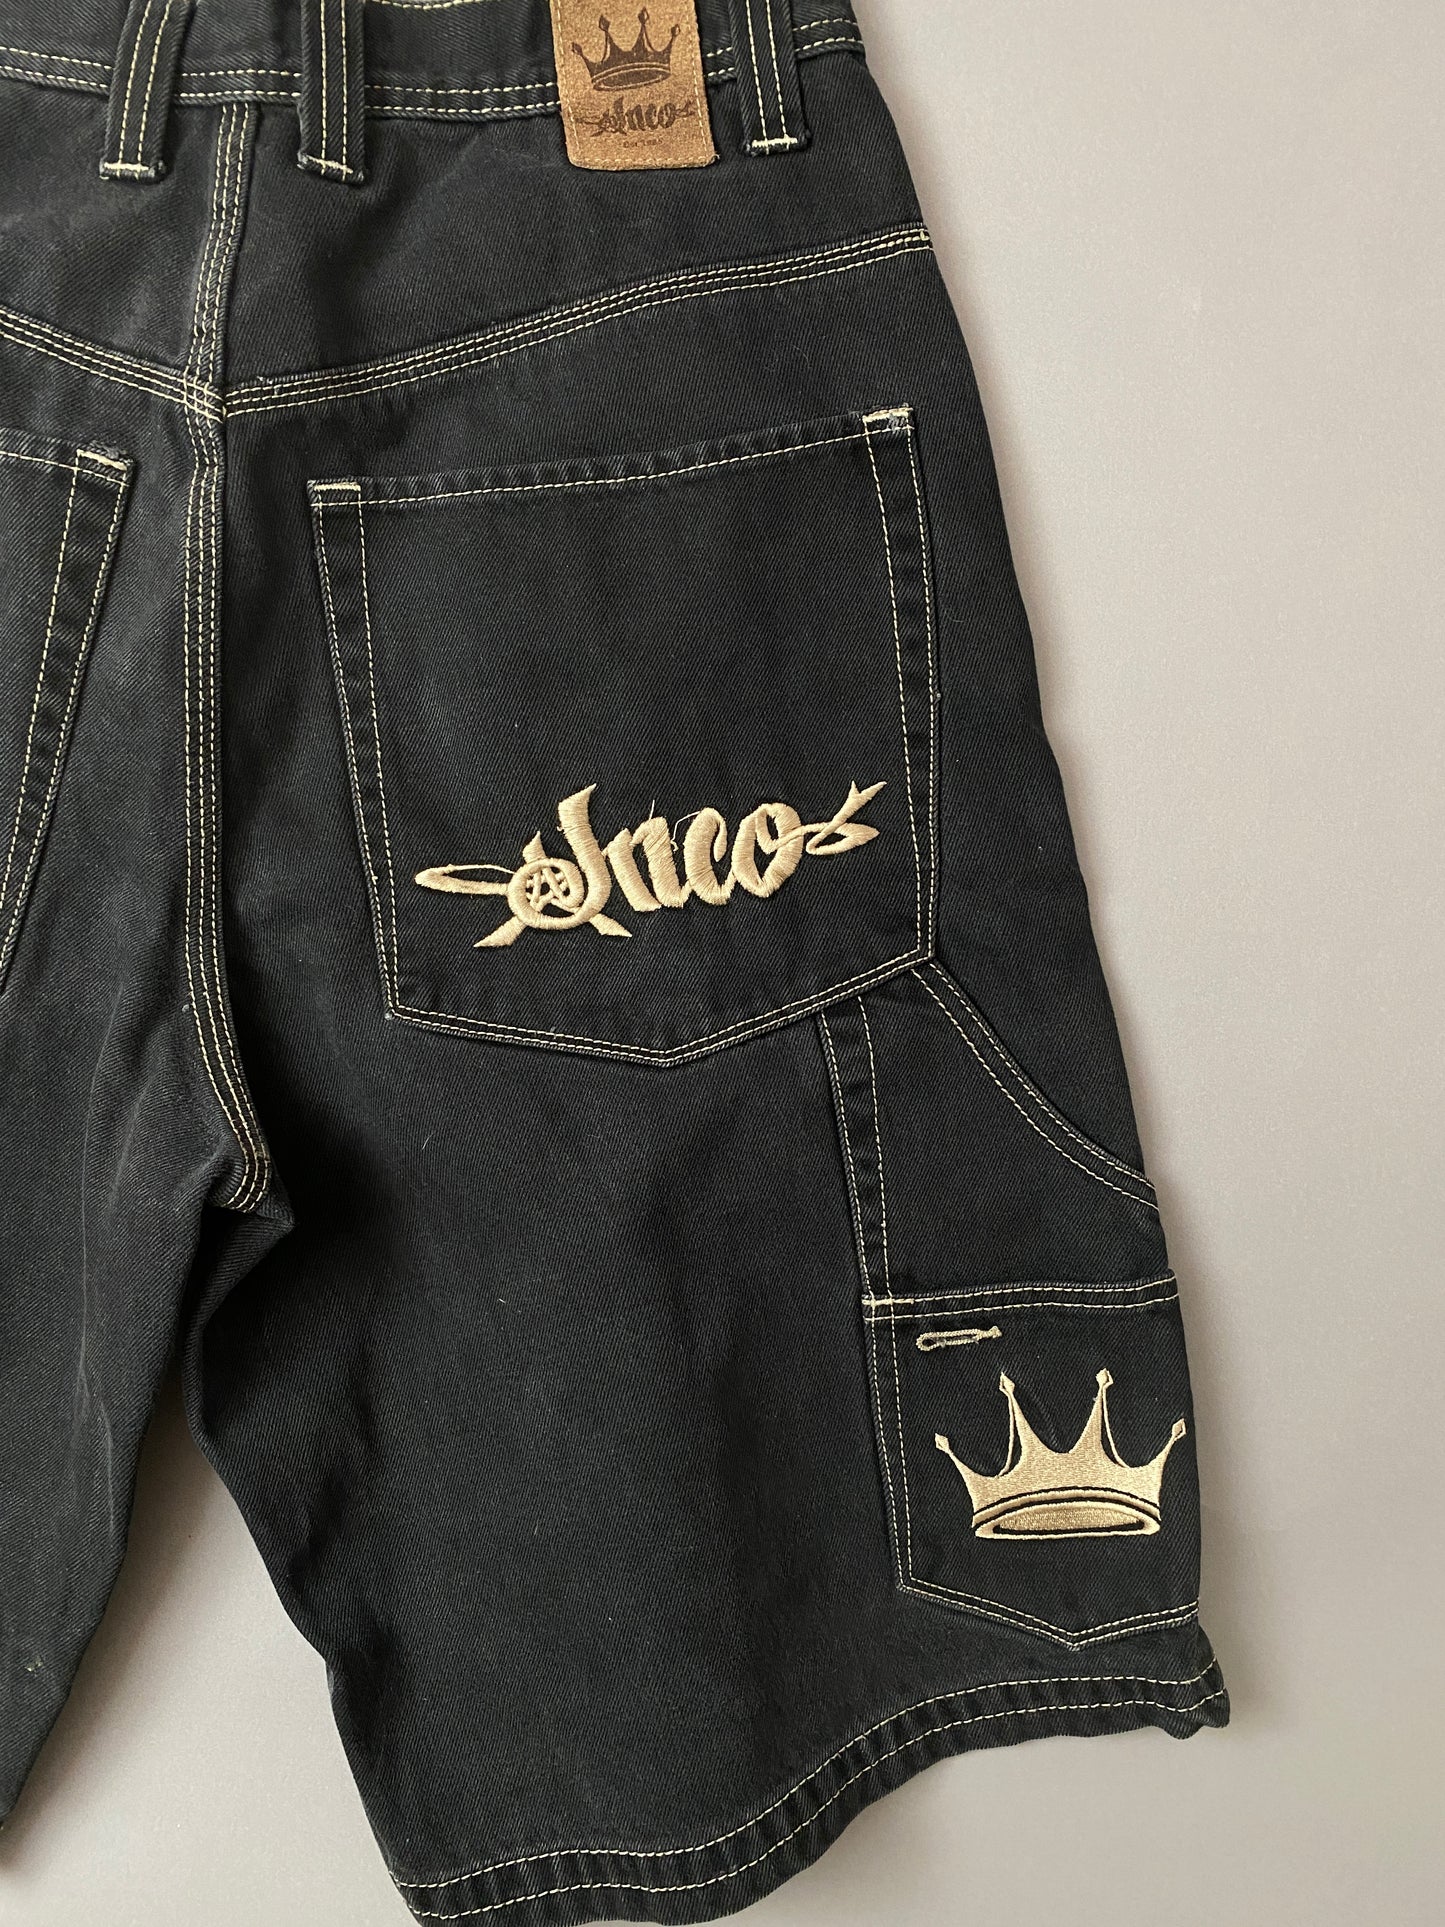 JNCO Vintage Shorts - 34